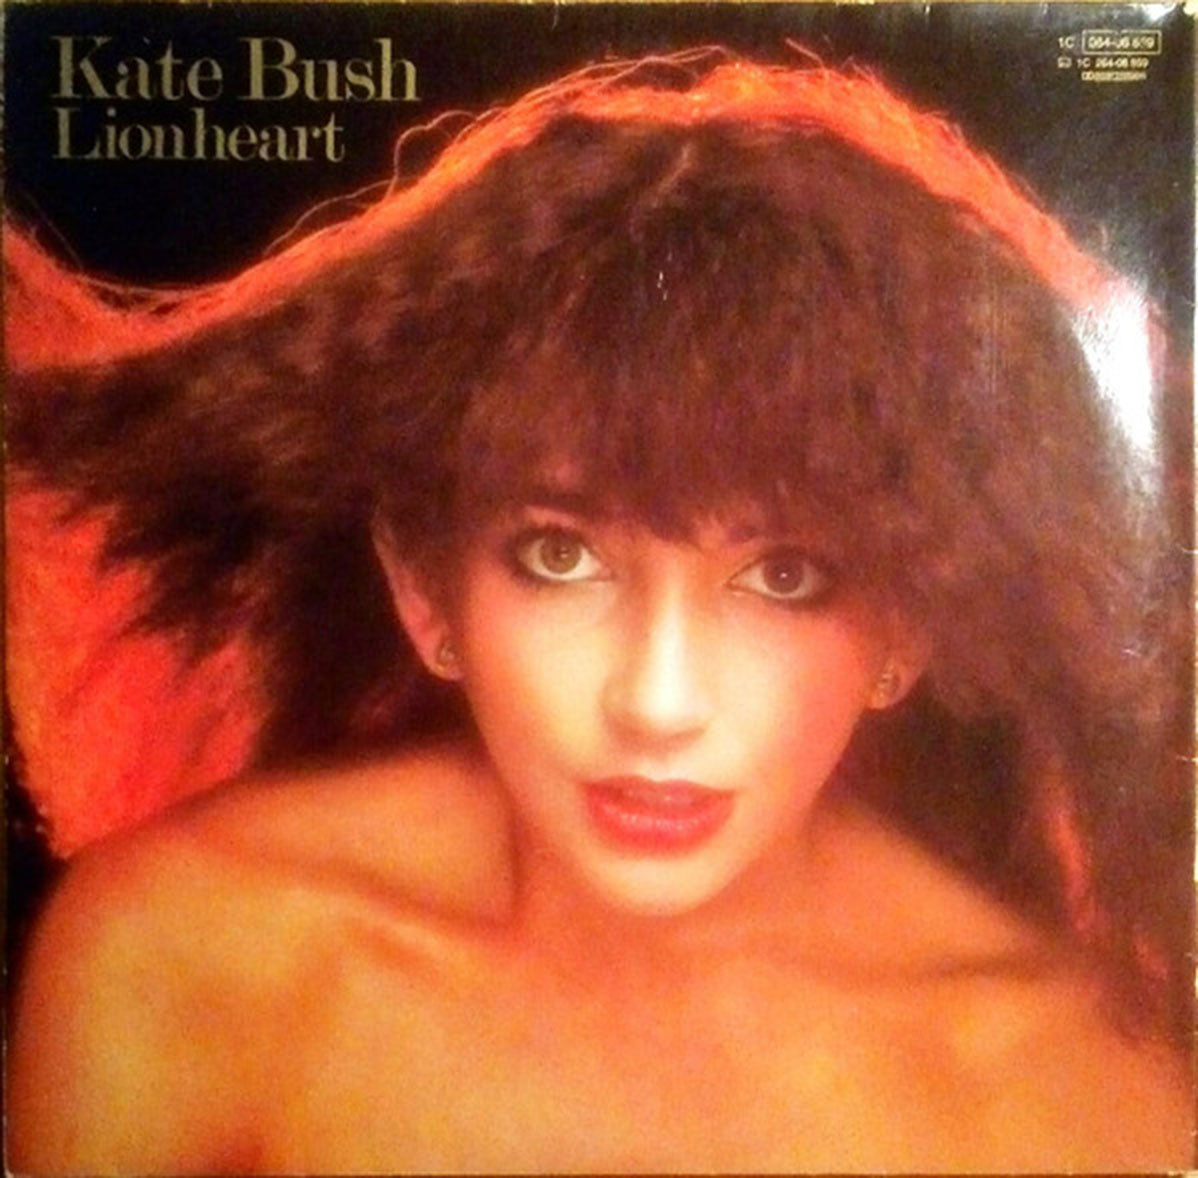 Kate Bush – Lionheart - 1978 German Pressing